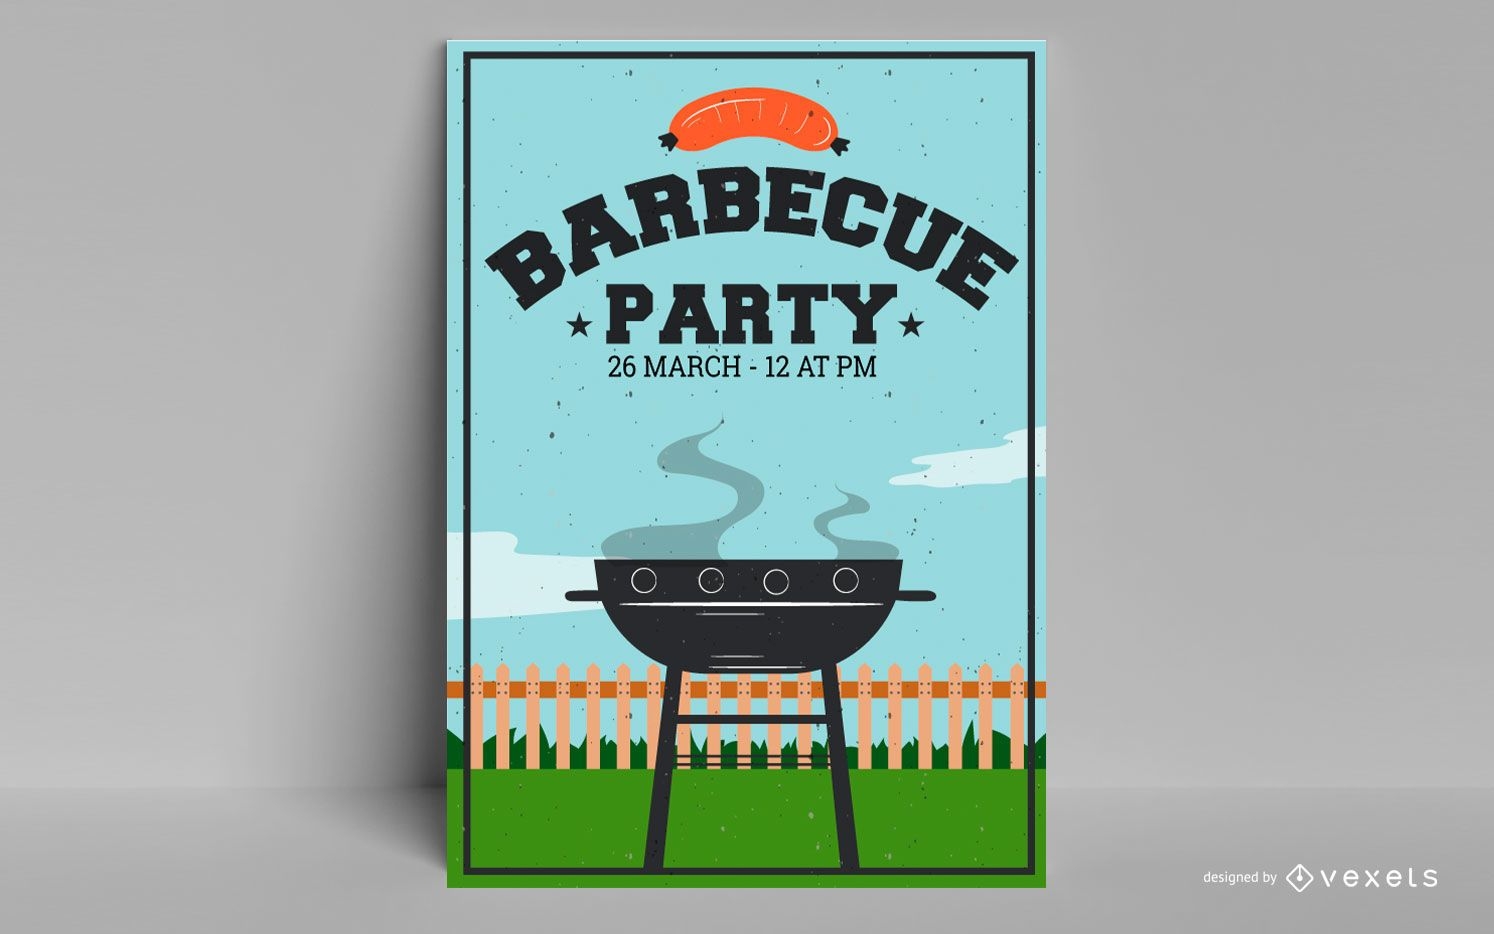 Barbecue-Partyplakatdesign